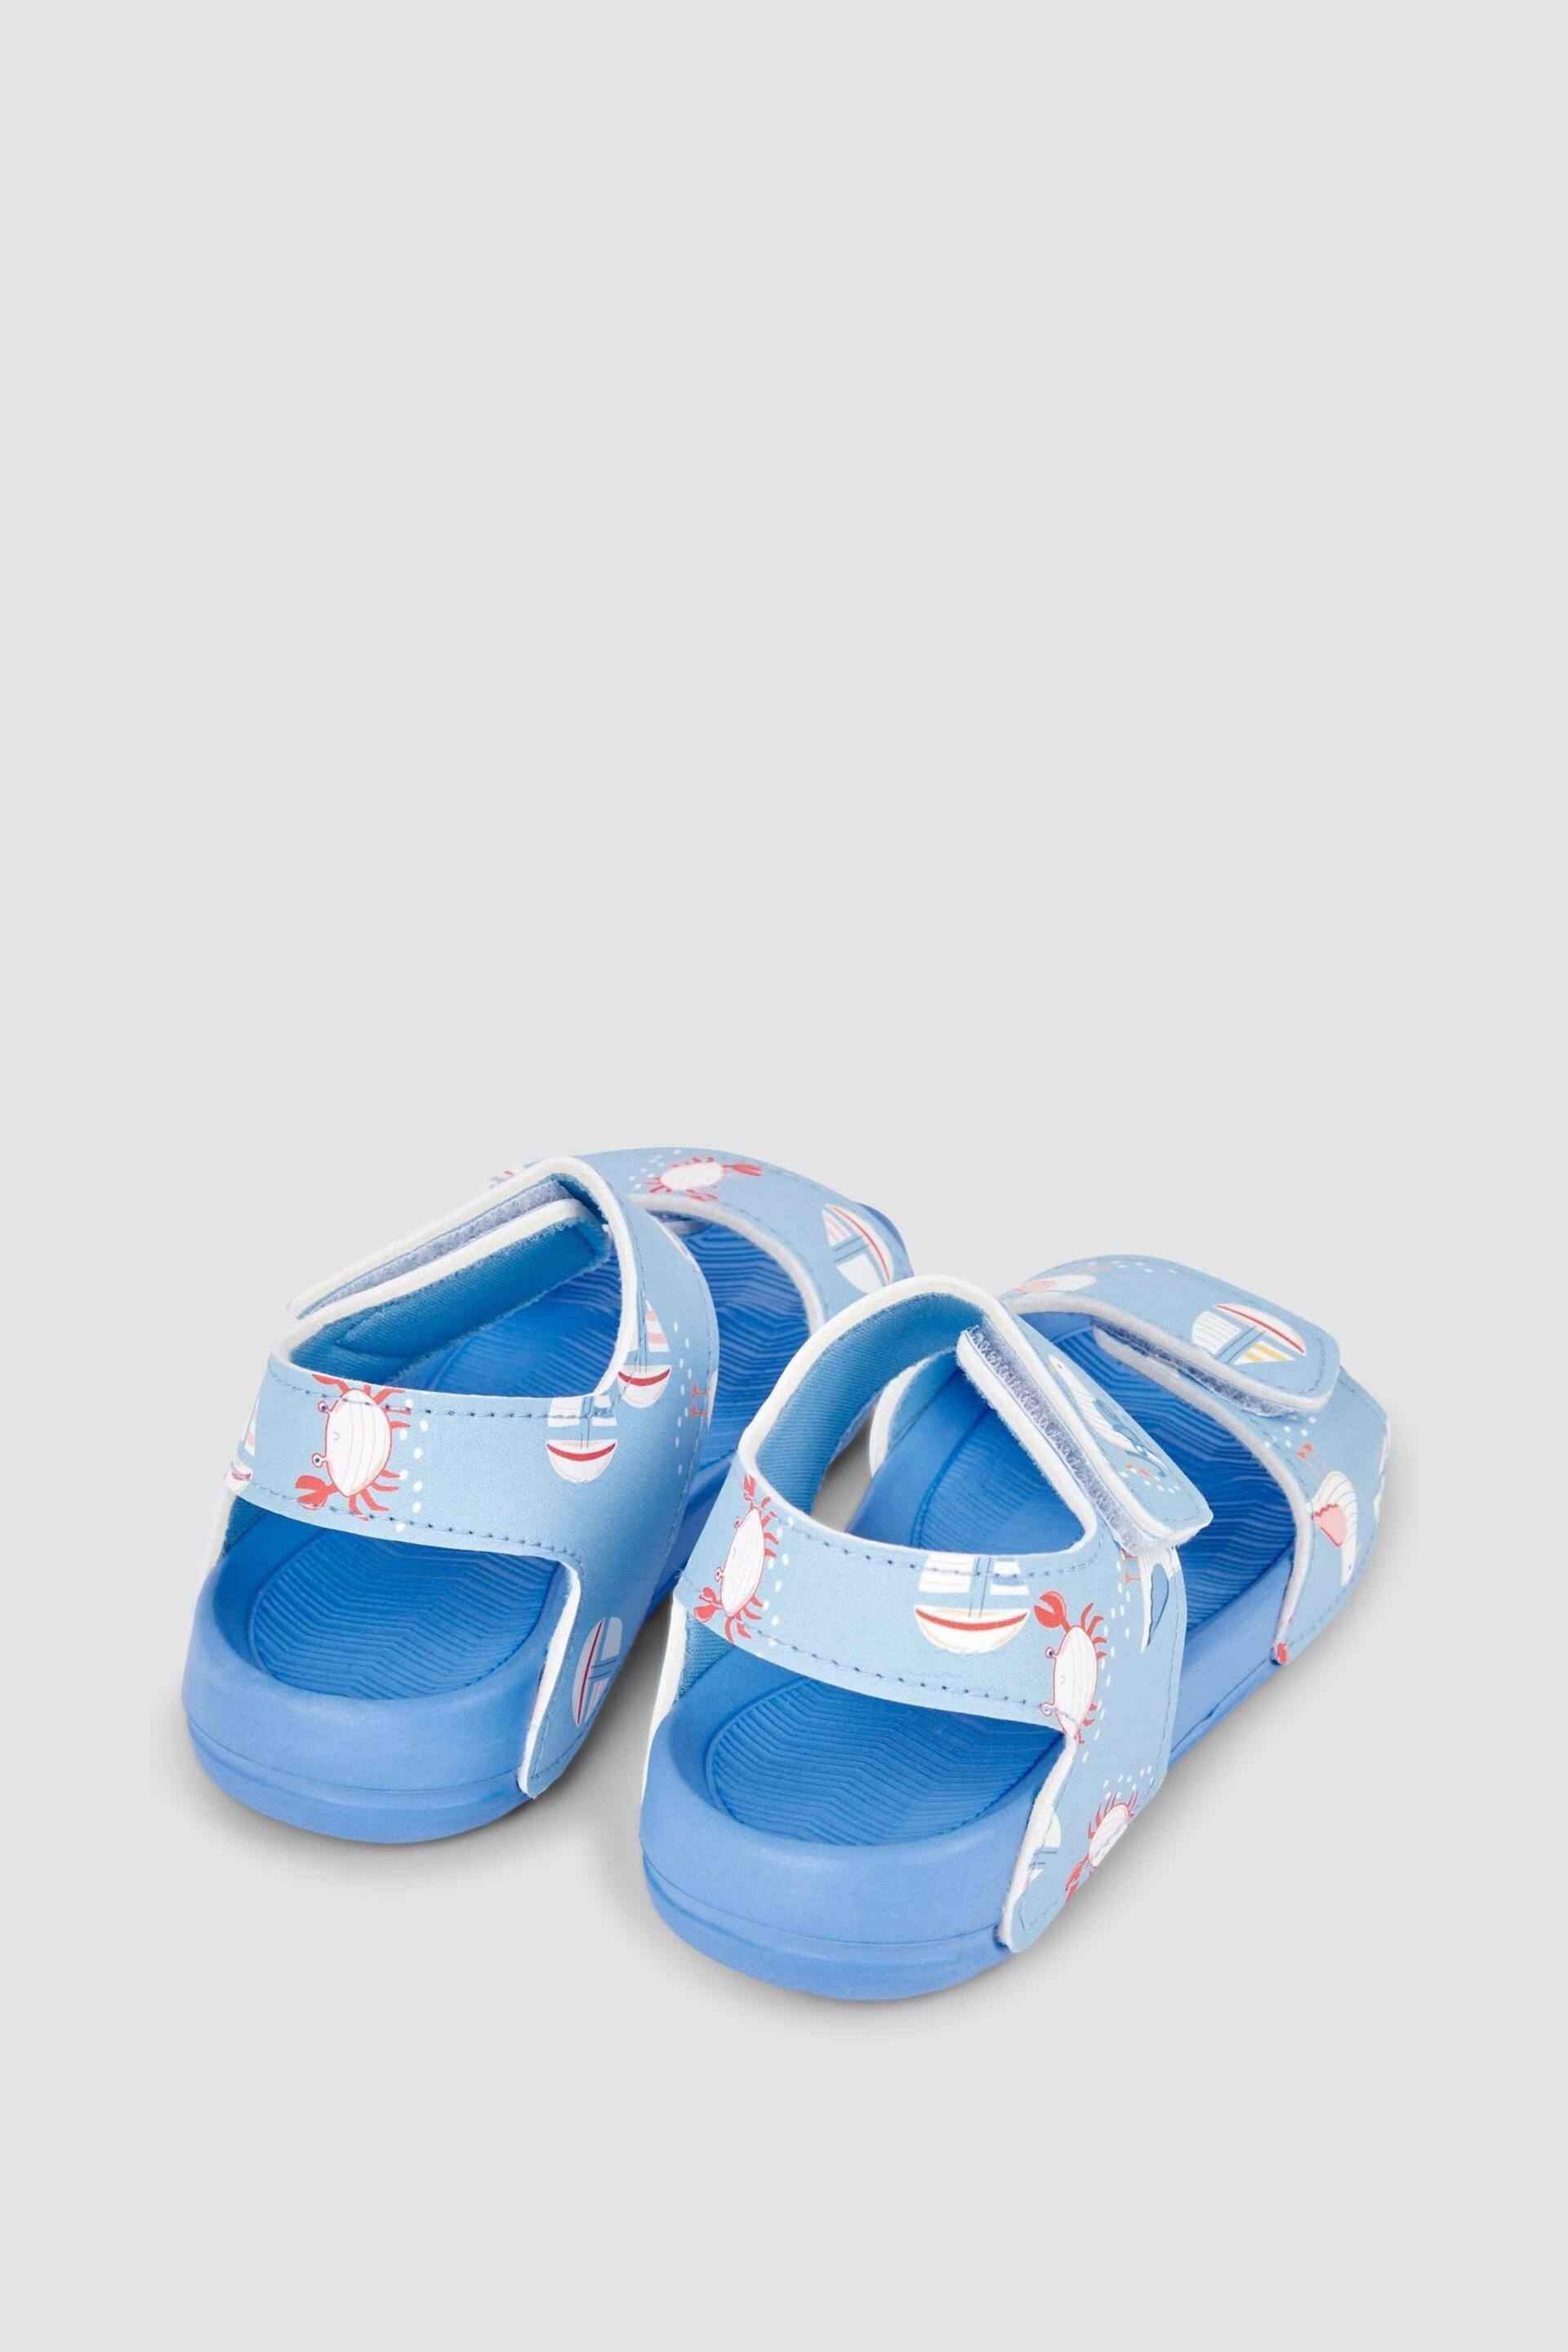 JoJo Maman Bébé Blue Summer Sandals - Image 2 of 4